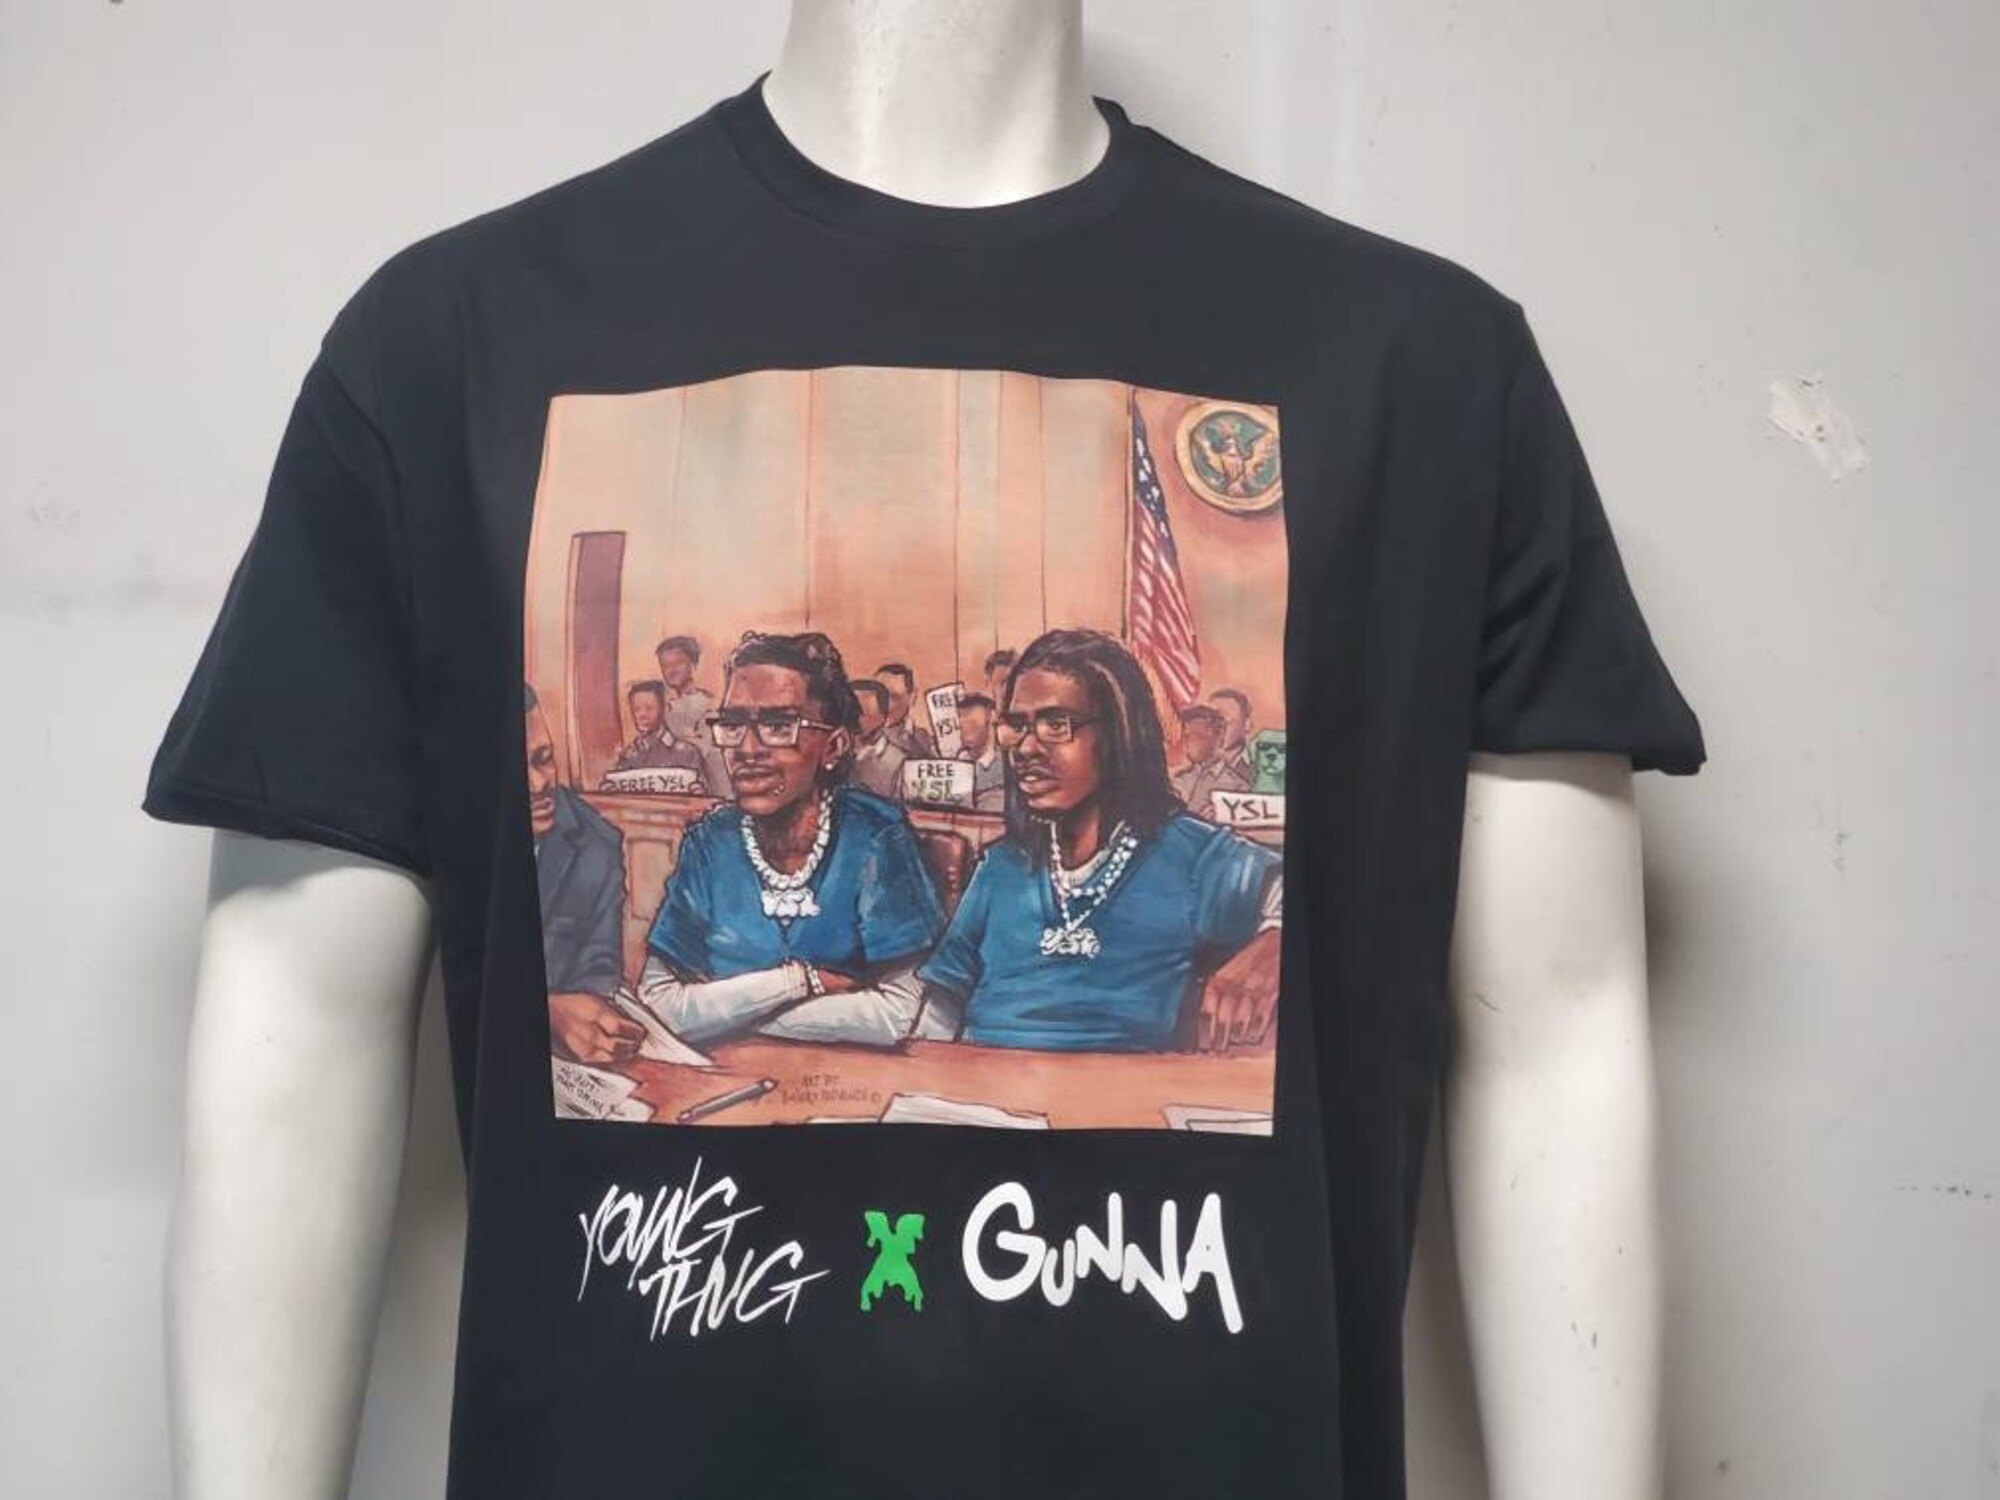 Free Young Thug x Gunna in Court T shirt